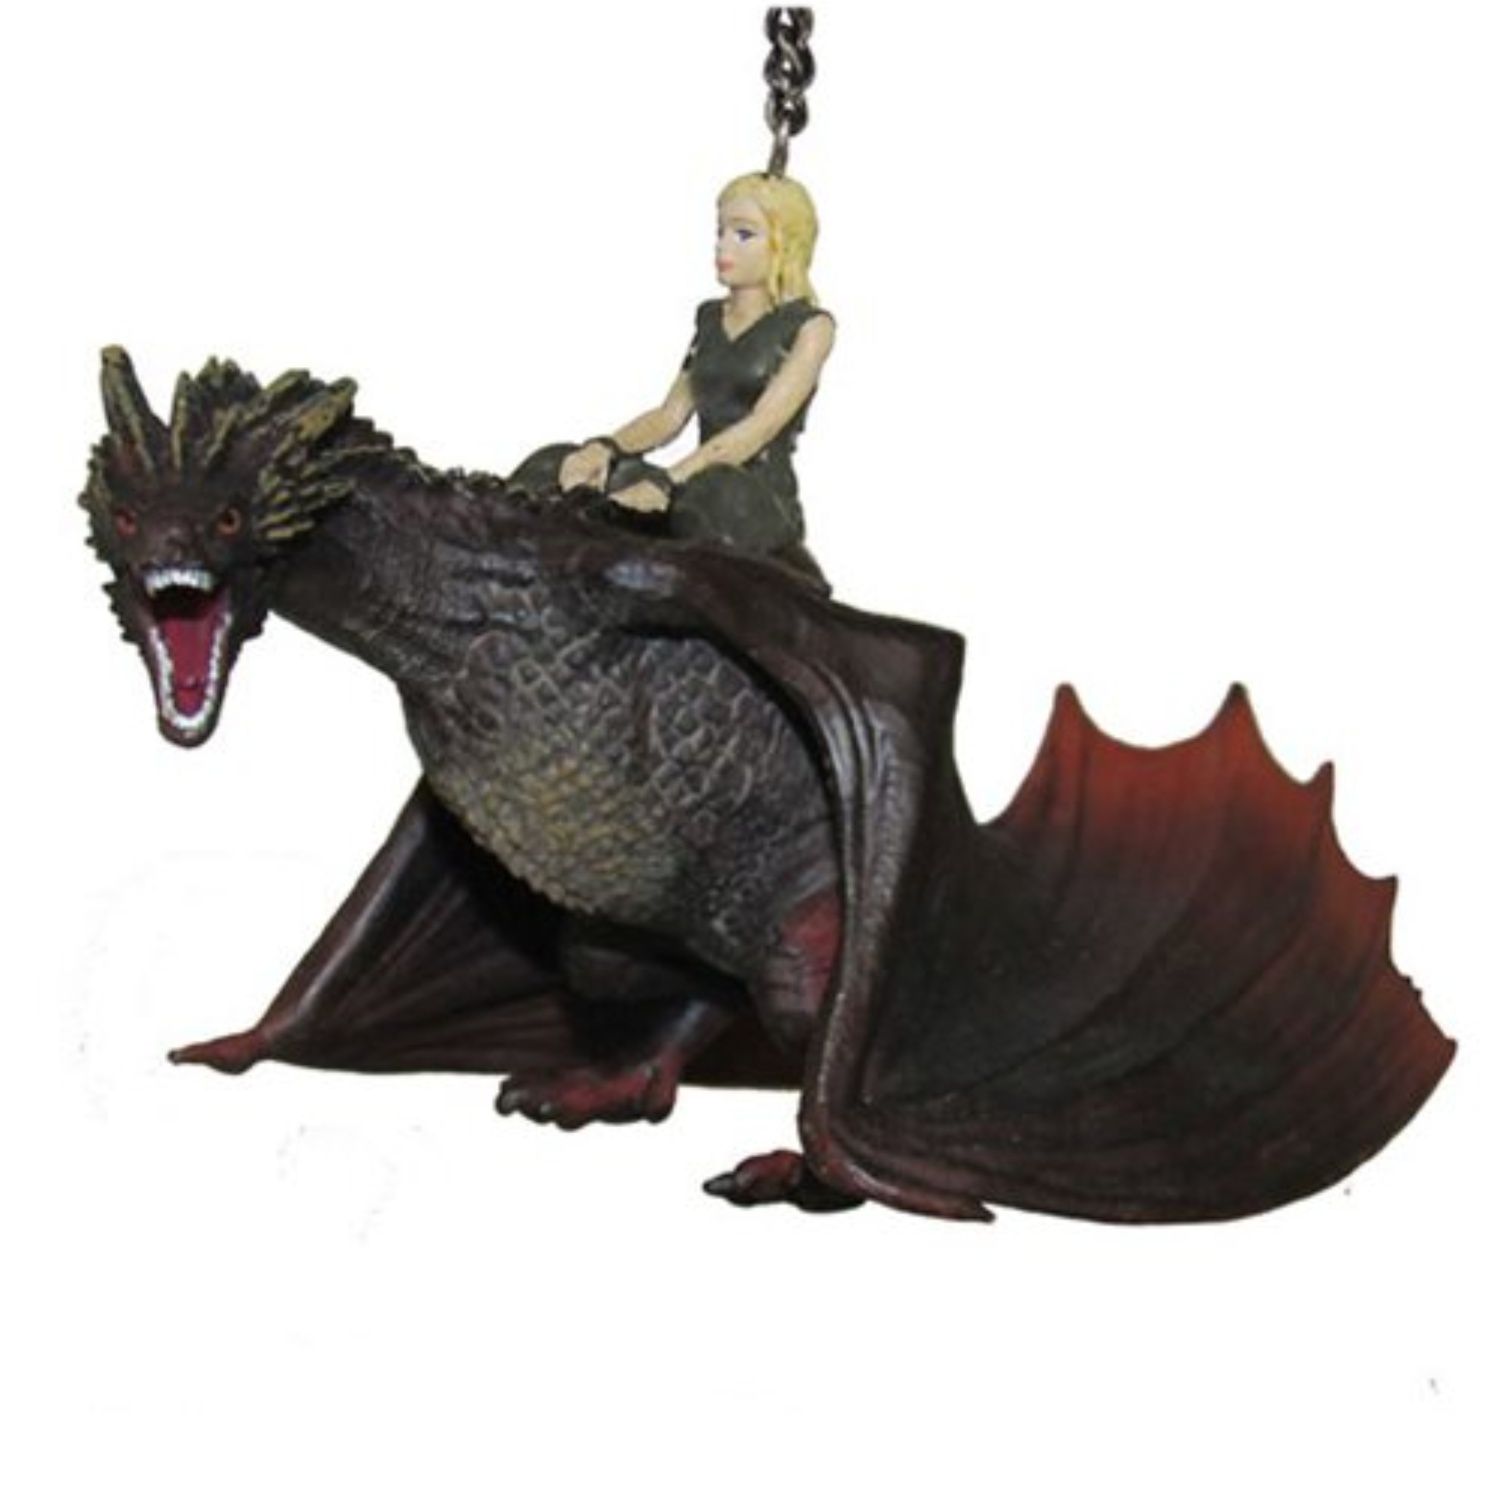 This ornament features Daenerys Targaryen